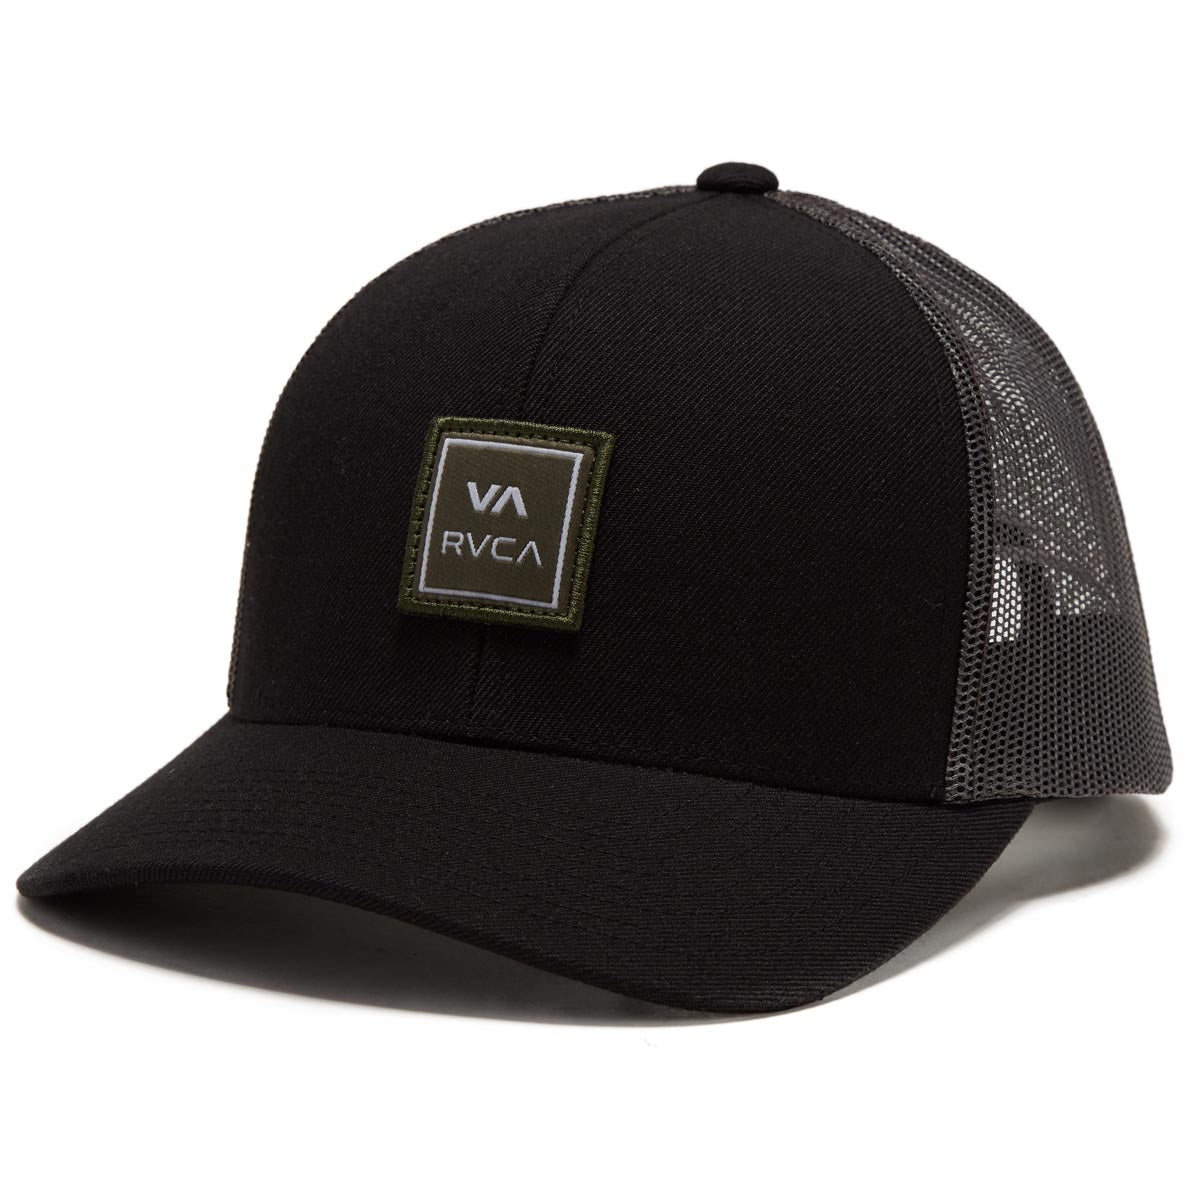 RVCA Va Station Trucker Hat - Black/Brown image 1